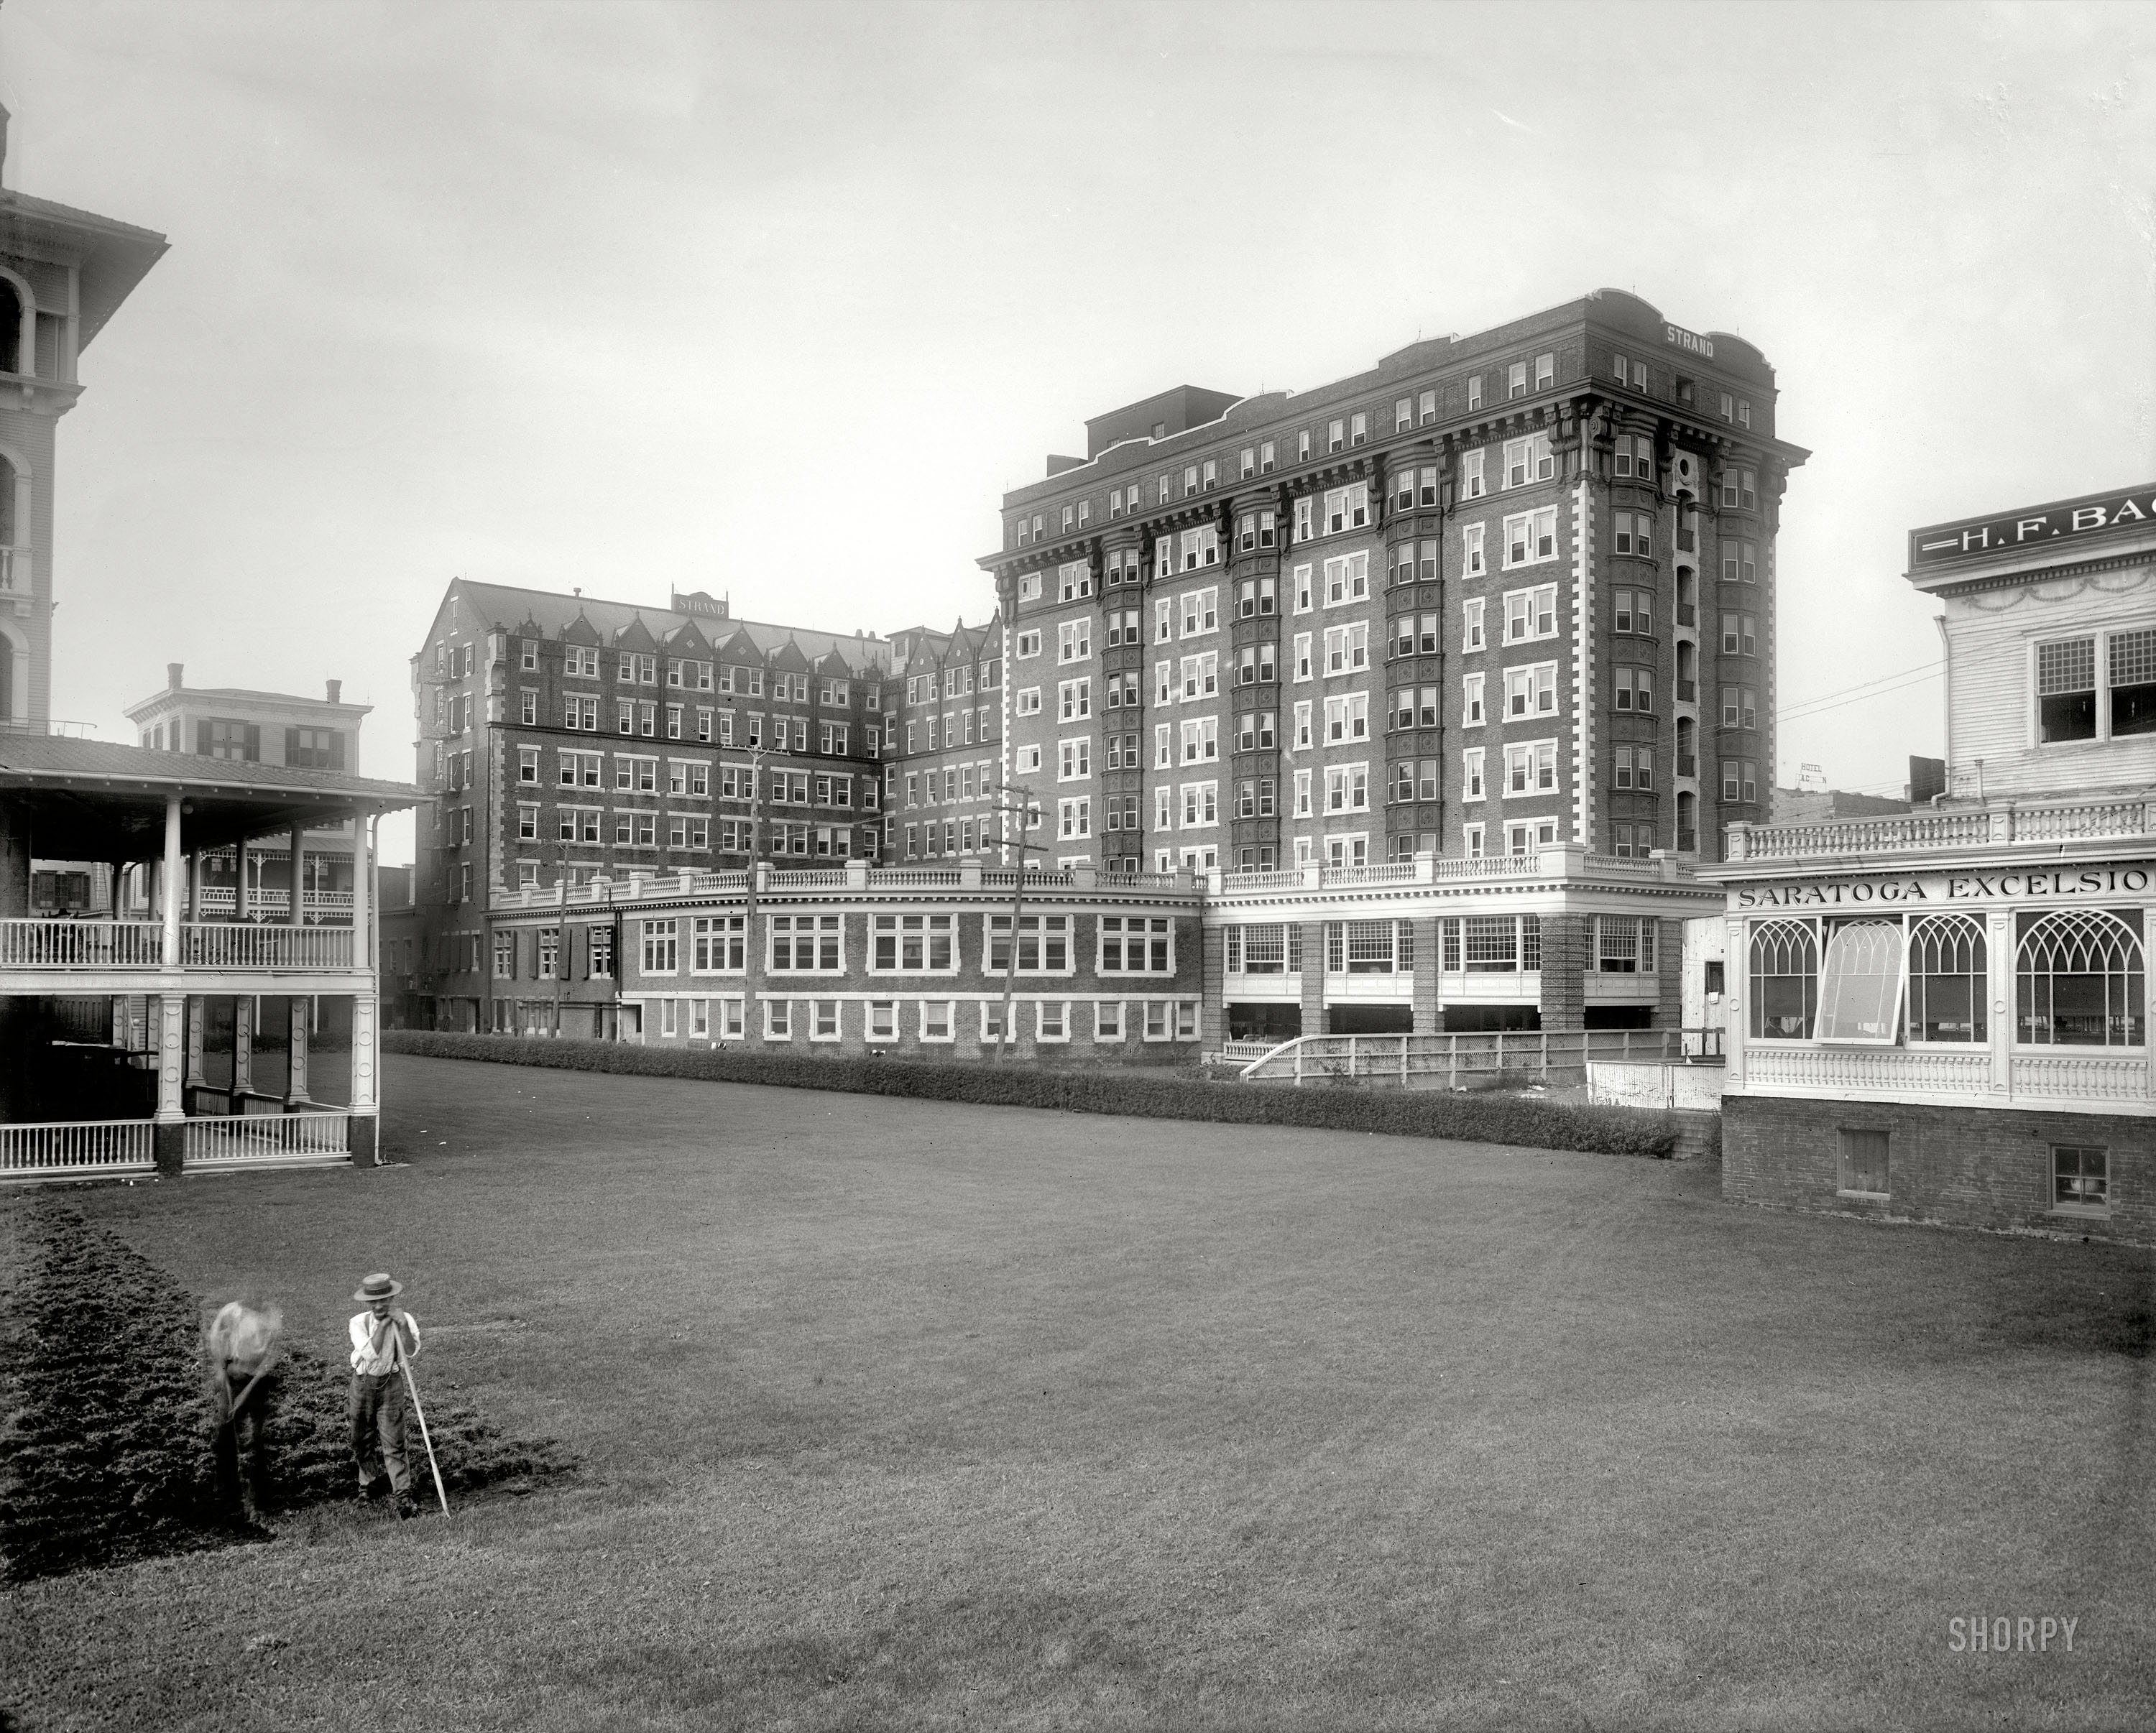 Atlantic City circa 1911. "Hotel Strand." And a vista of manicured monochrome greenery. 8x10 inch glass negative, Detroit Publishing Co. View full size.